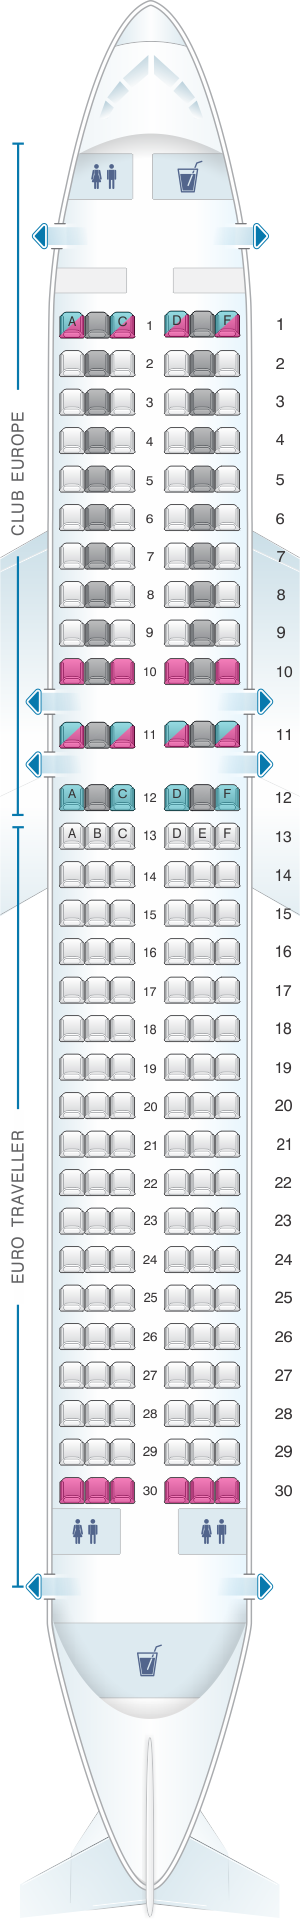 Seat map for British Airways Airbus A320 European Layout